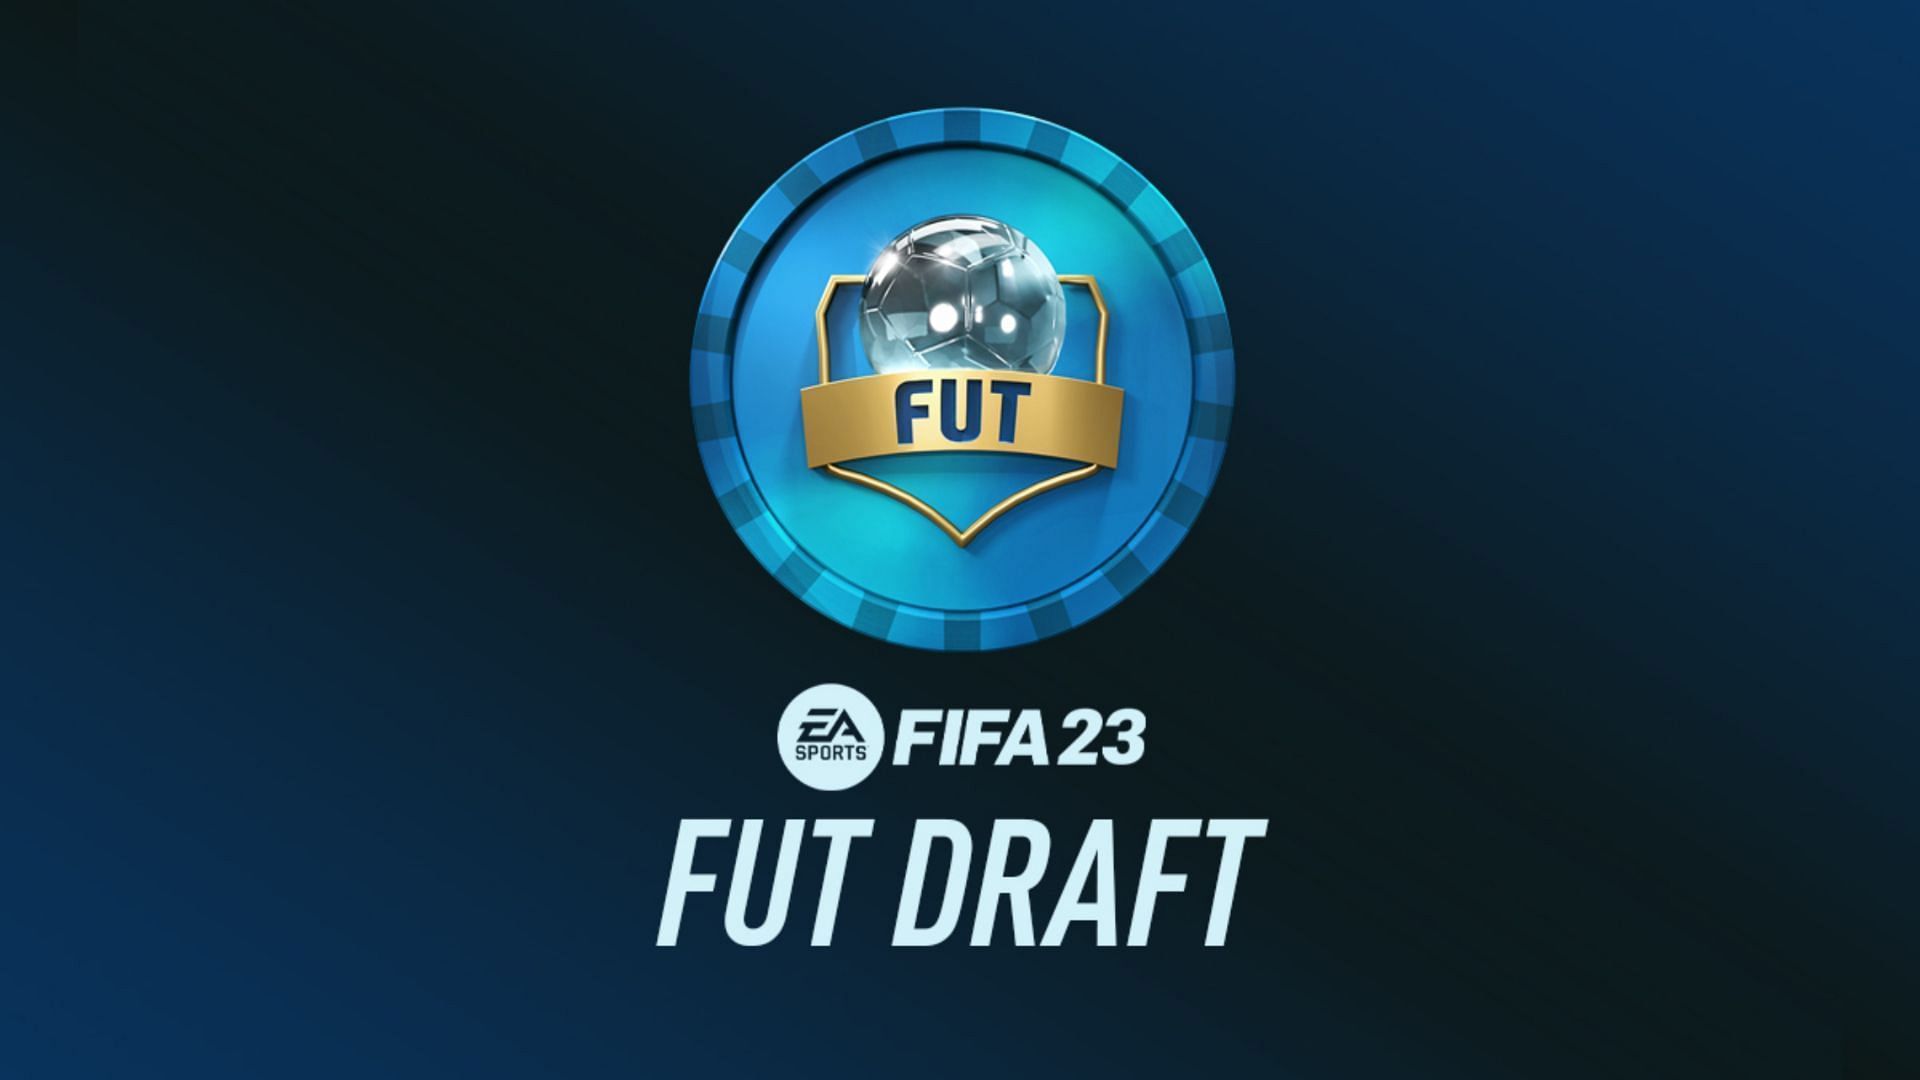 FIFA 15 Ultimate Team Web App – FIFPlay